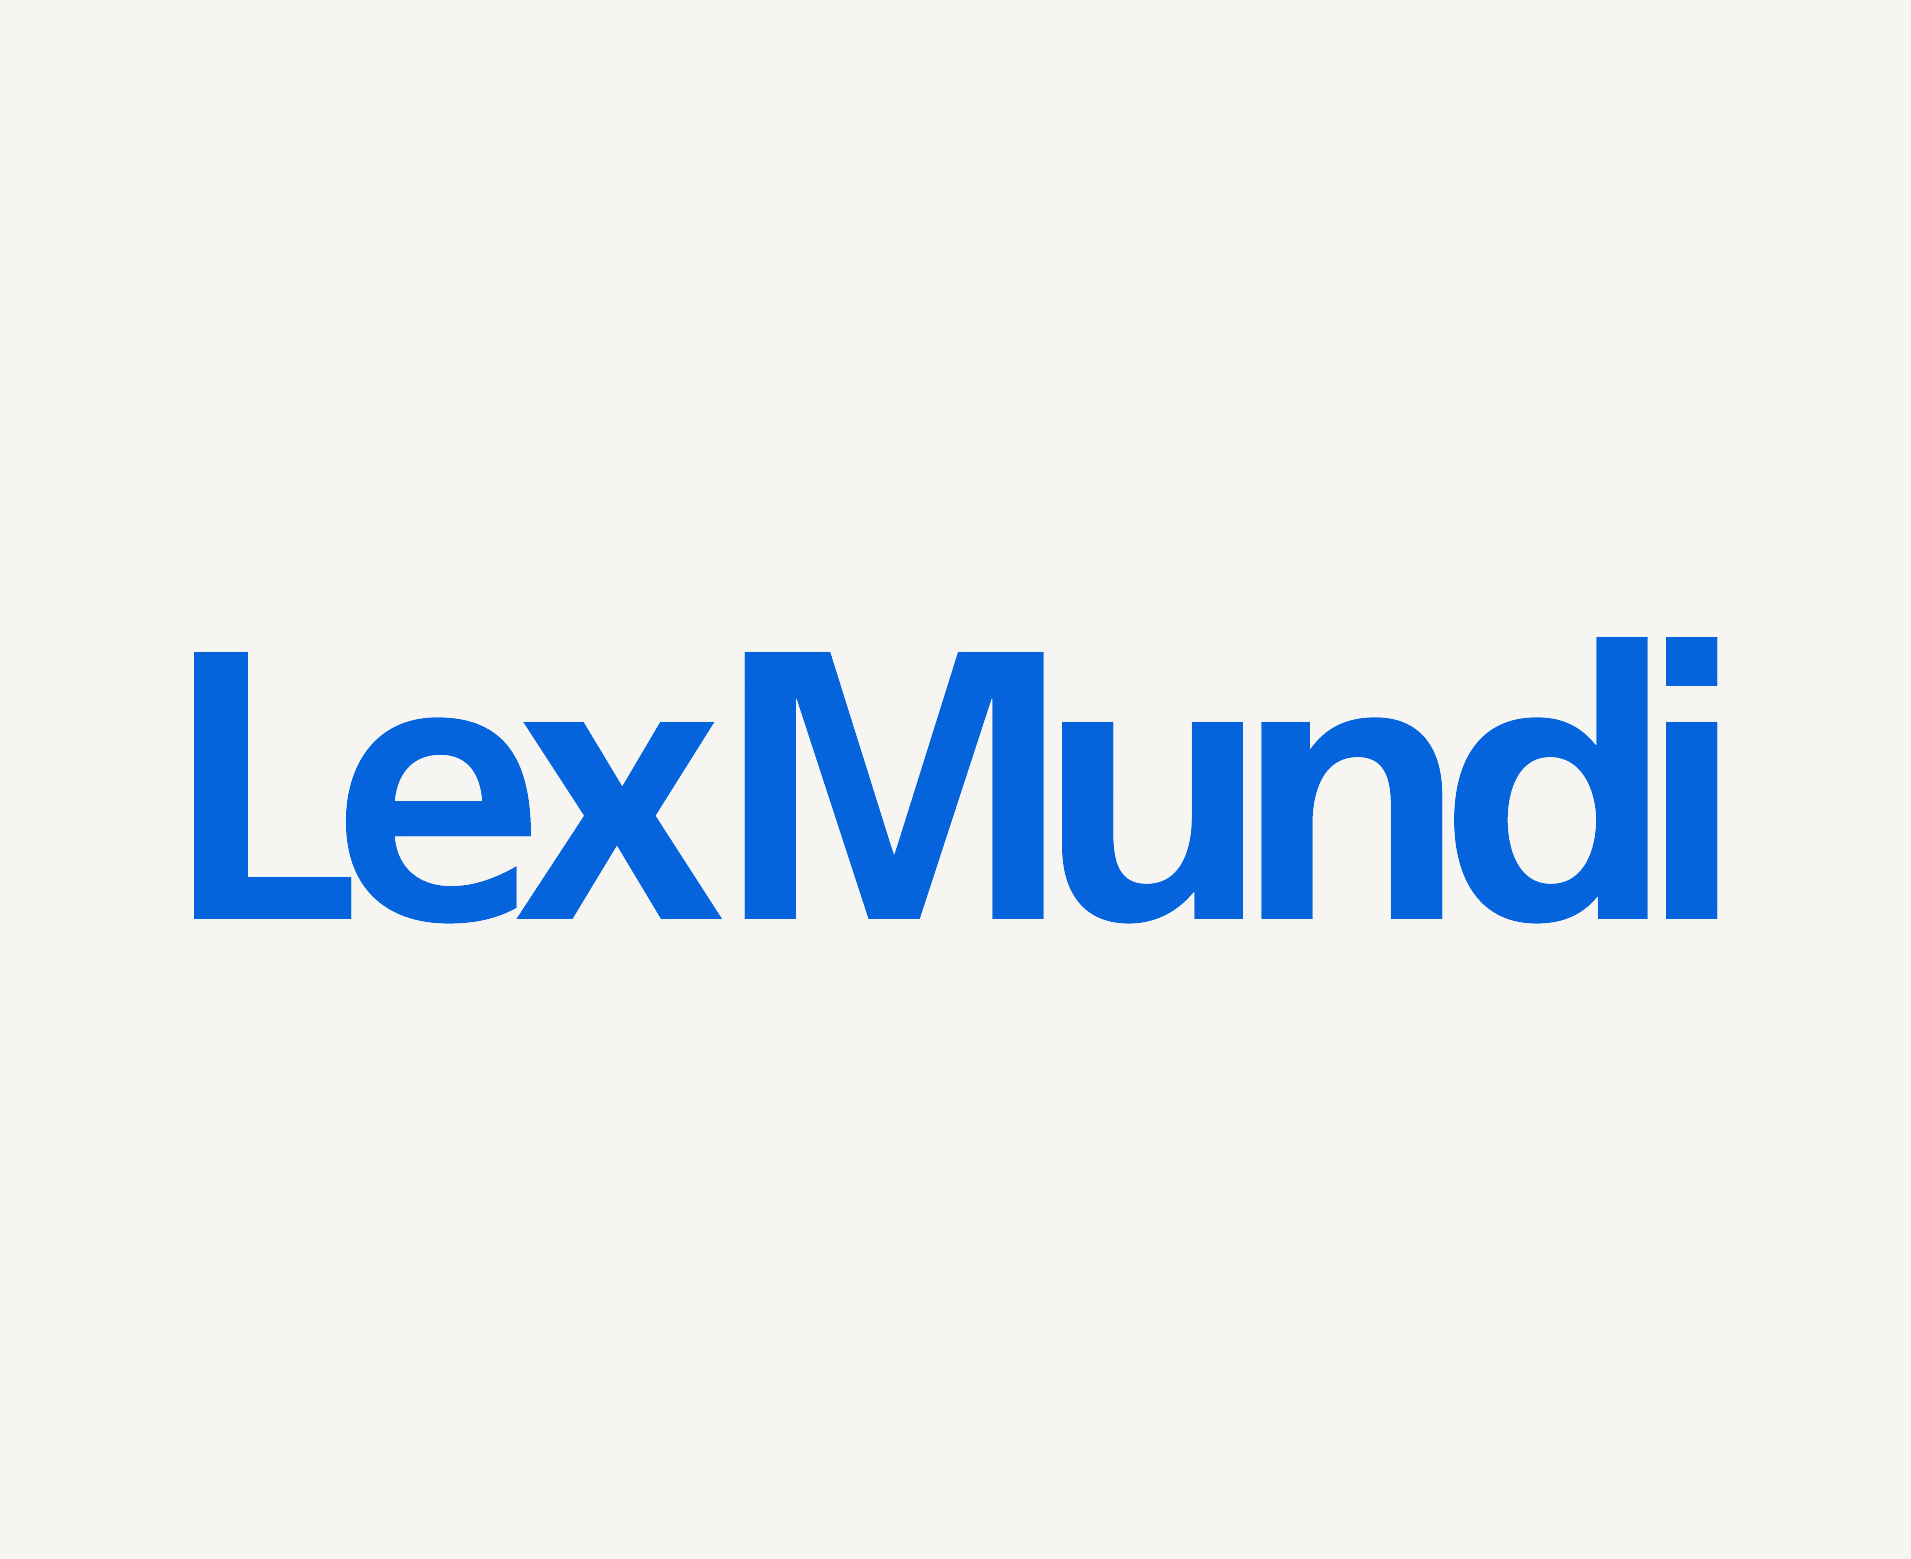 Lex Mundi